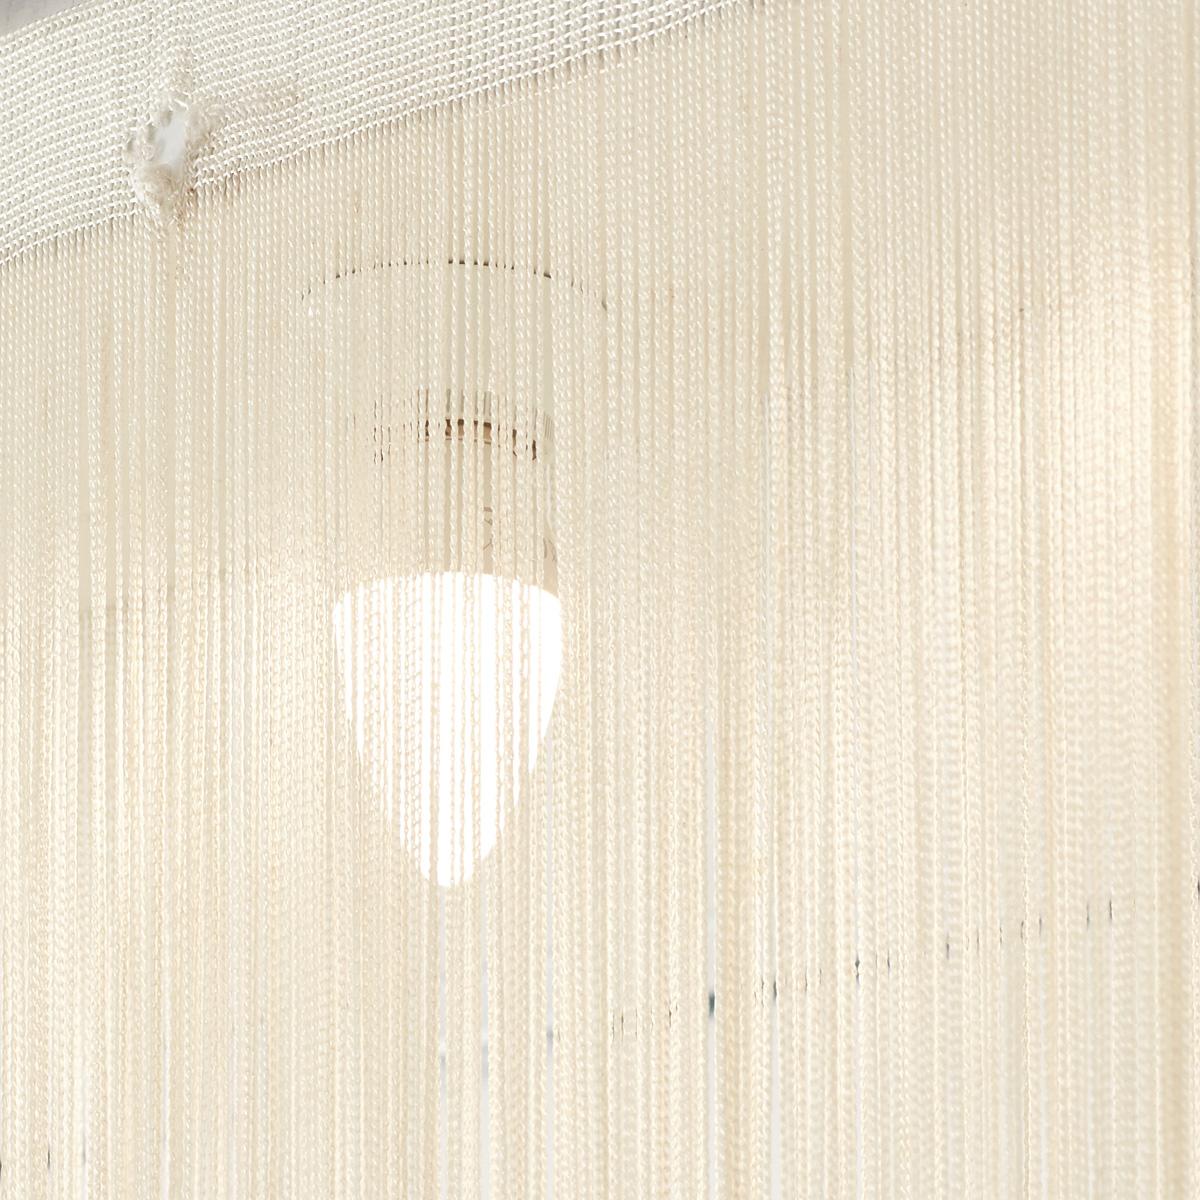 Mariyo Yagi ‘Garbo’ Fringed Ceiling Light for Sirrah, Italy, 1976 5